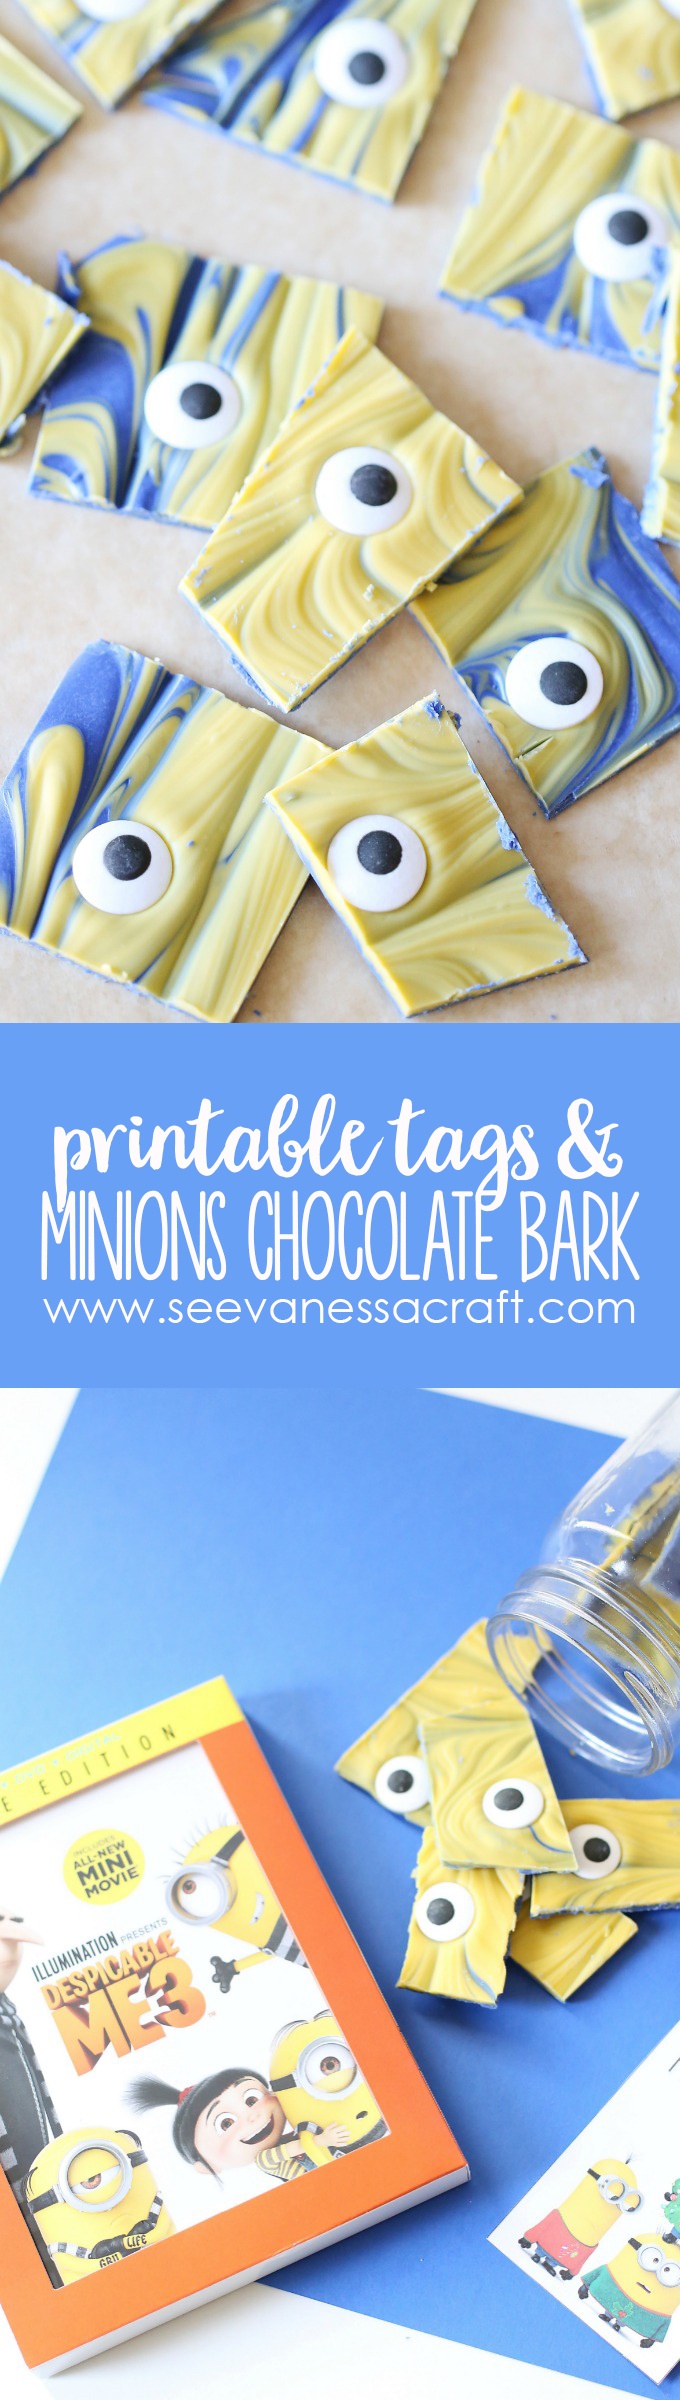 Minions Chocolate Bark Recipe and Printable Gift Tags